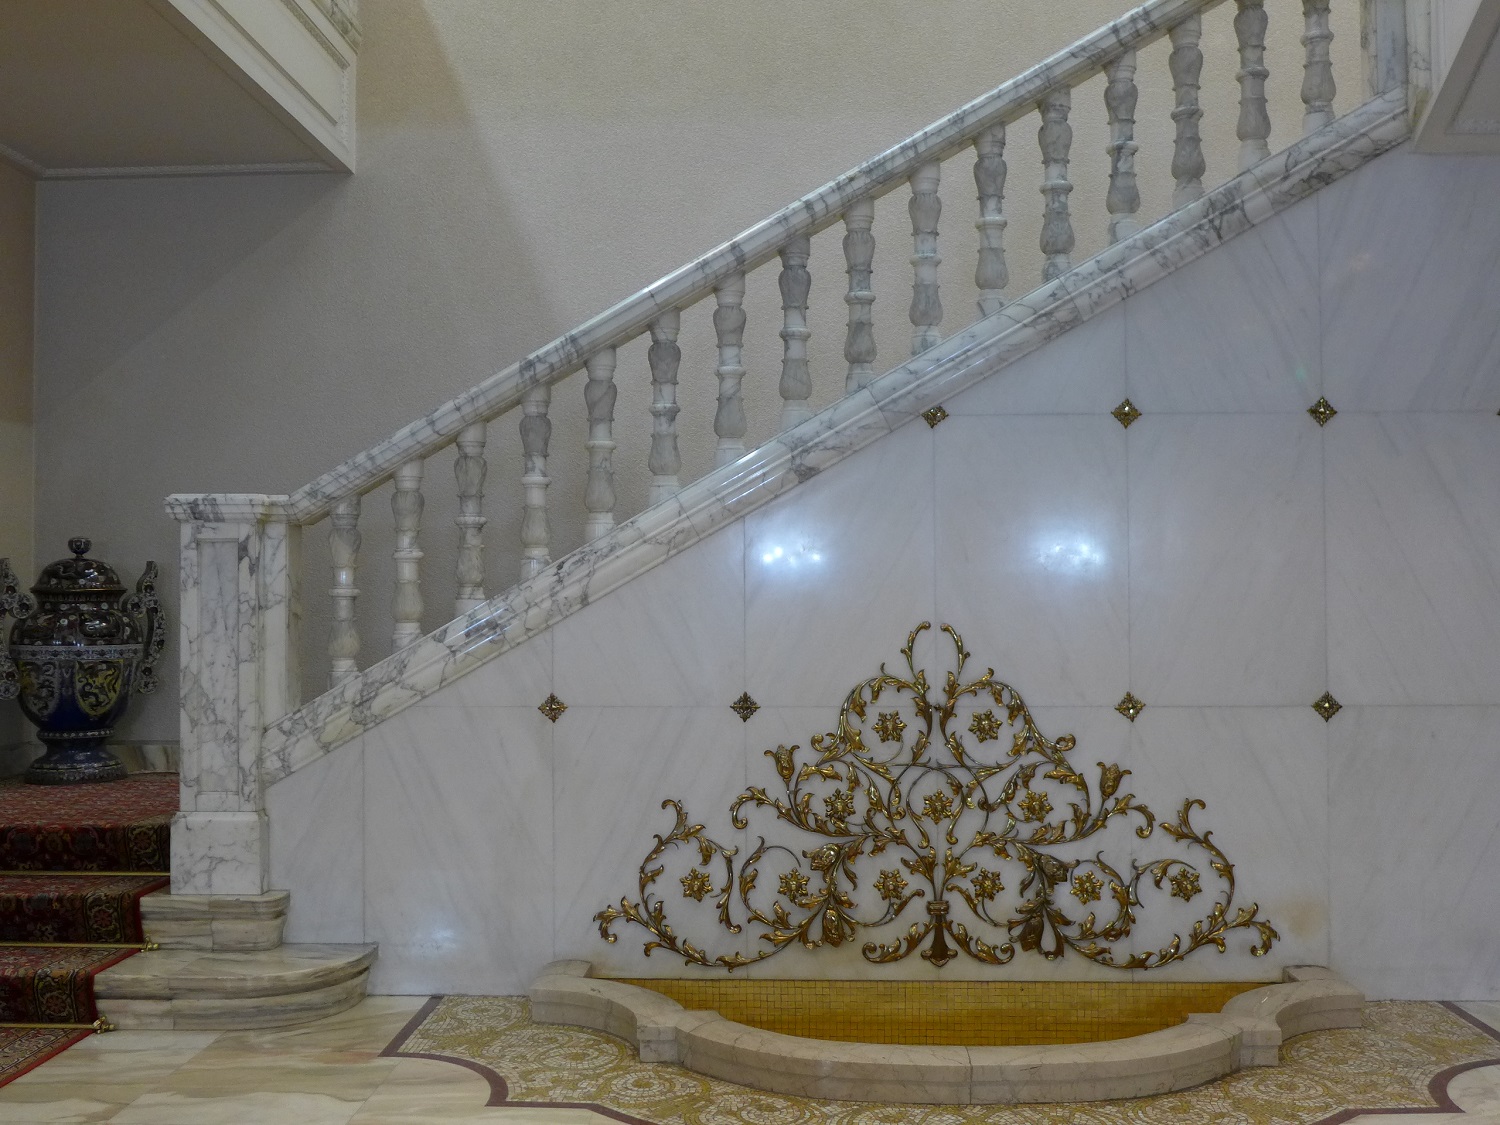 L’escalier en marbre.